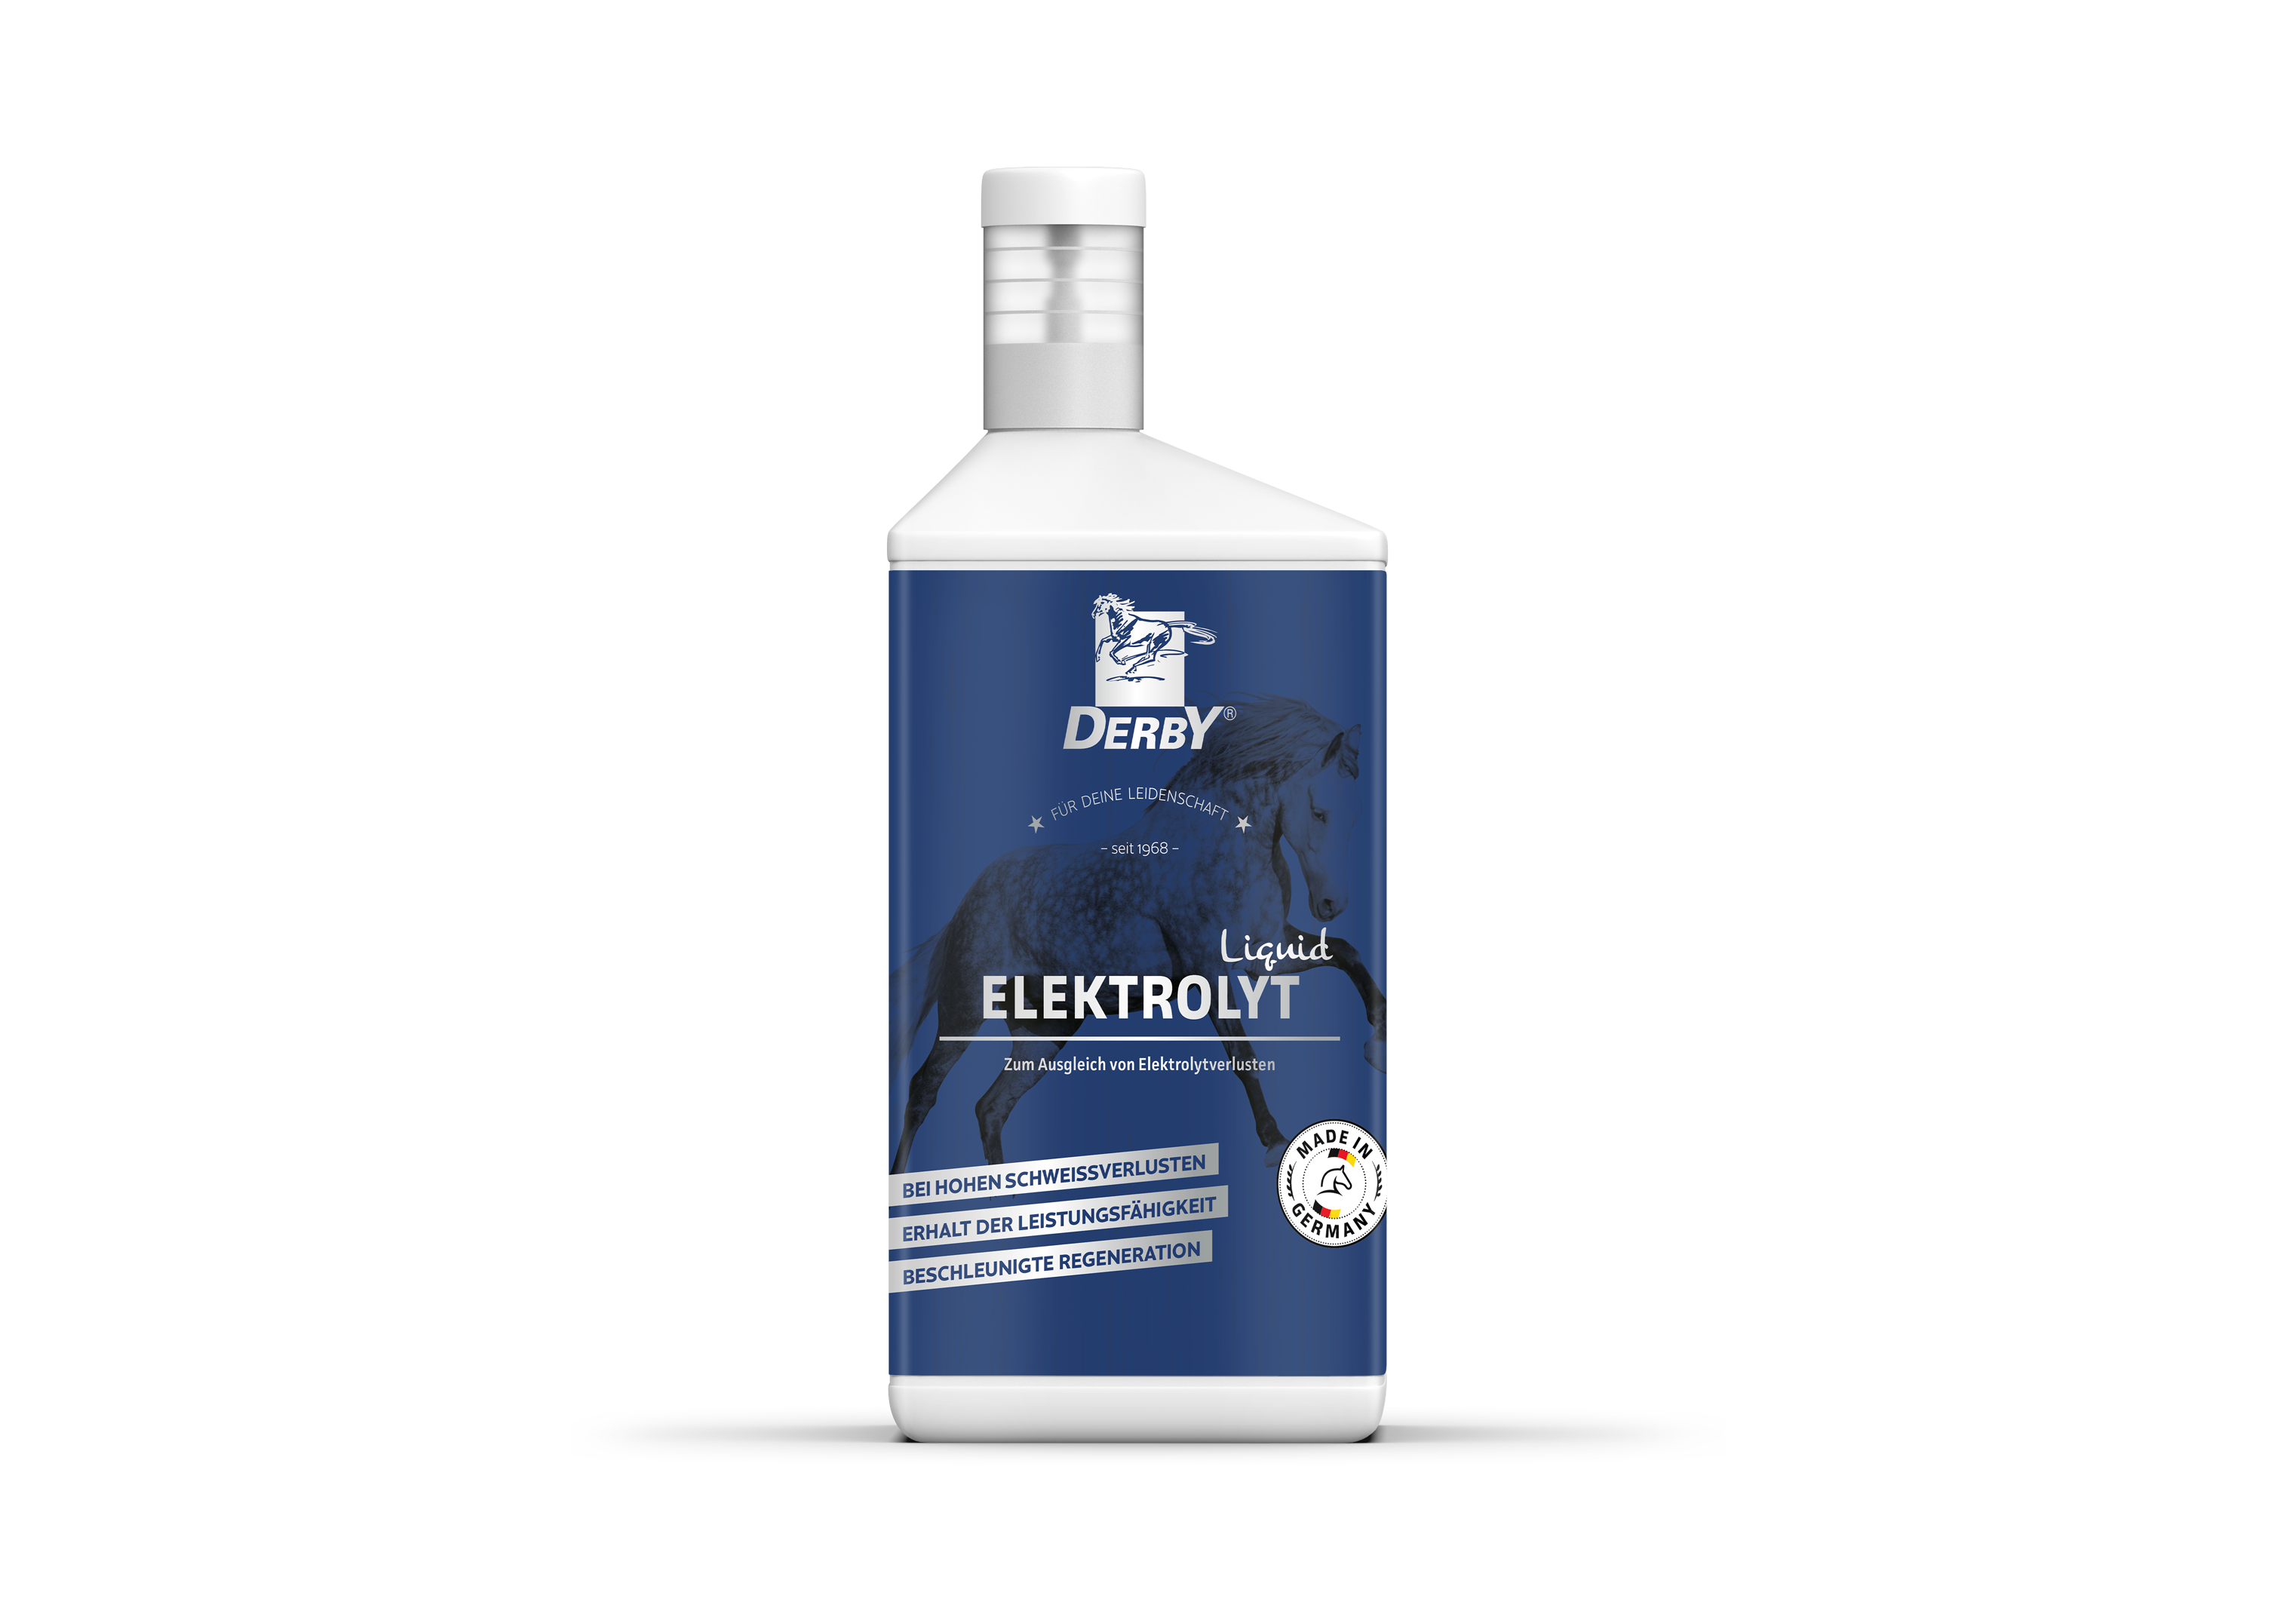 DERBY Elektrolyt liquid 5L-Kanister